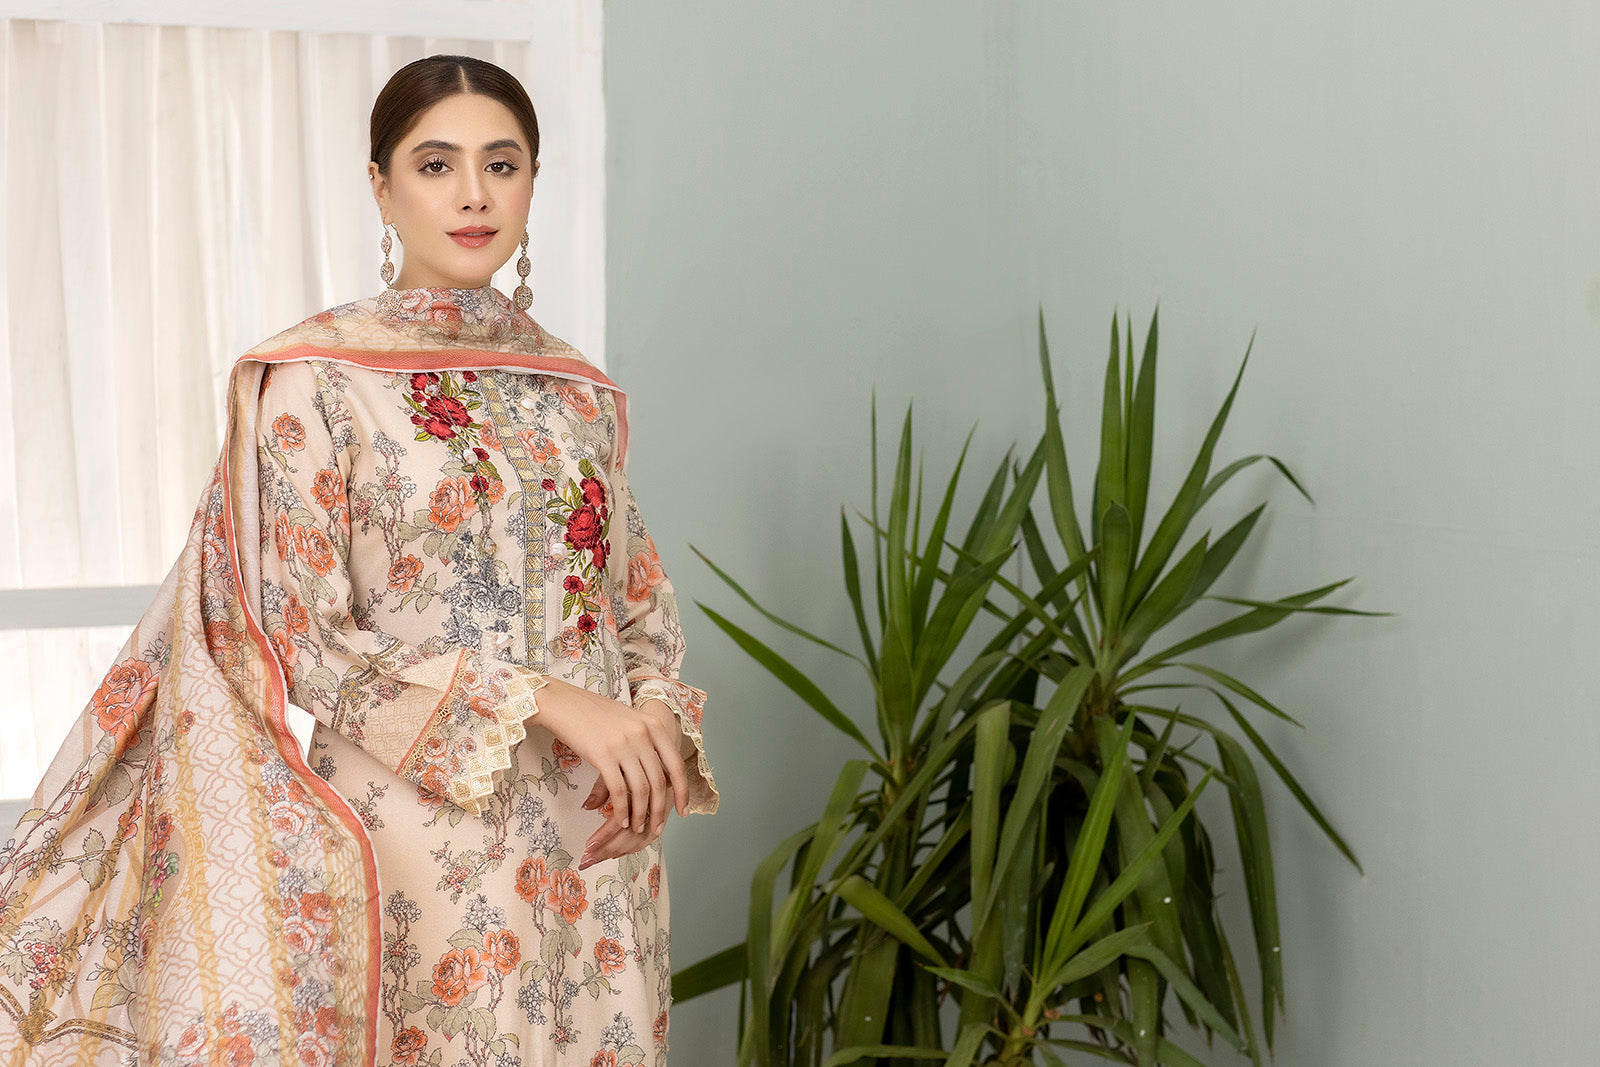 Readymade Luxury Casual Dhanak Dress